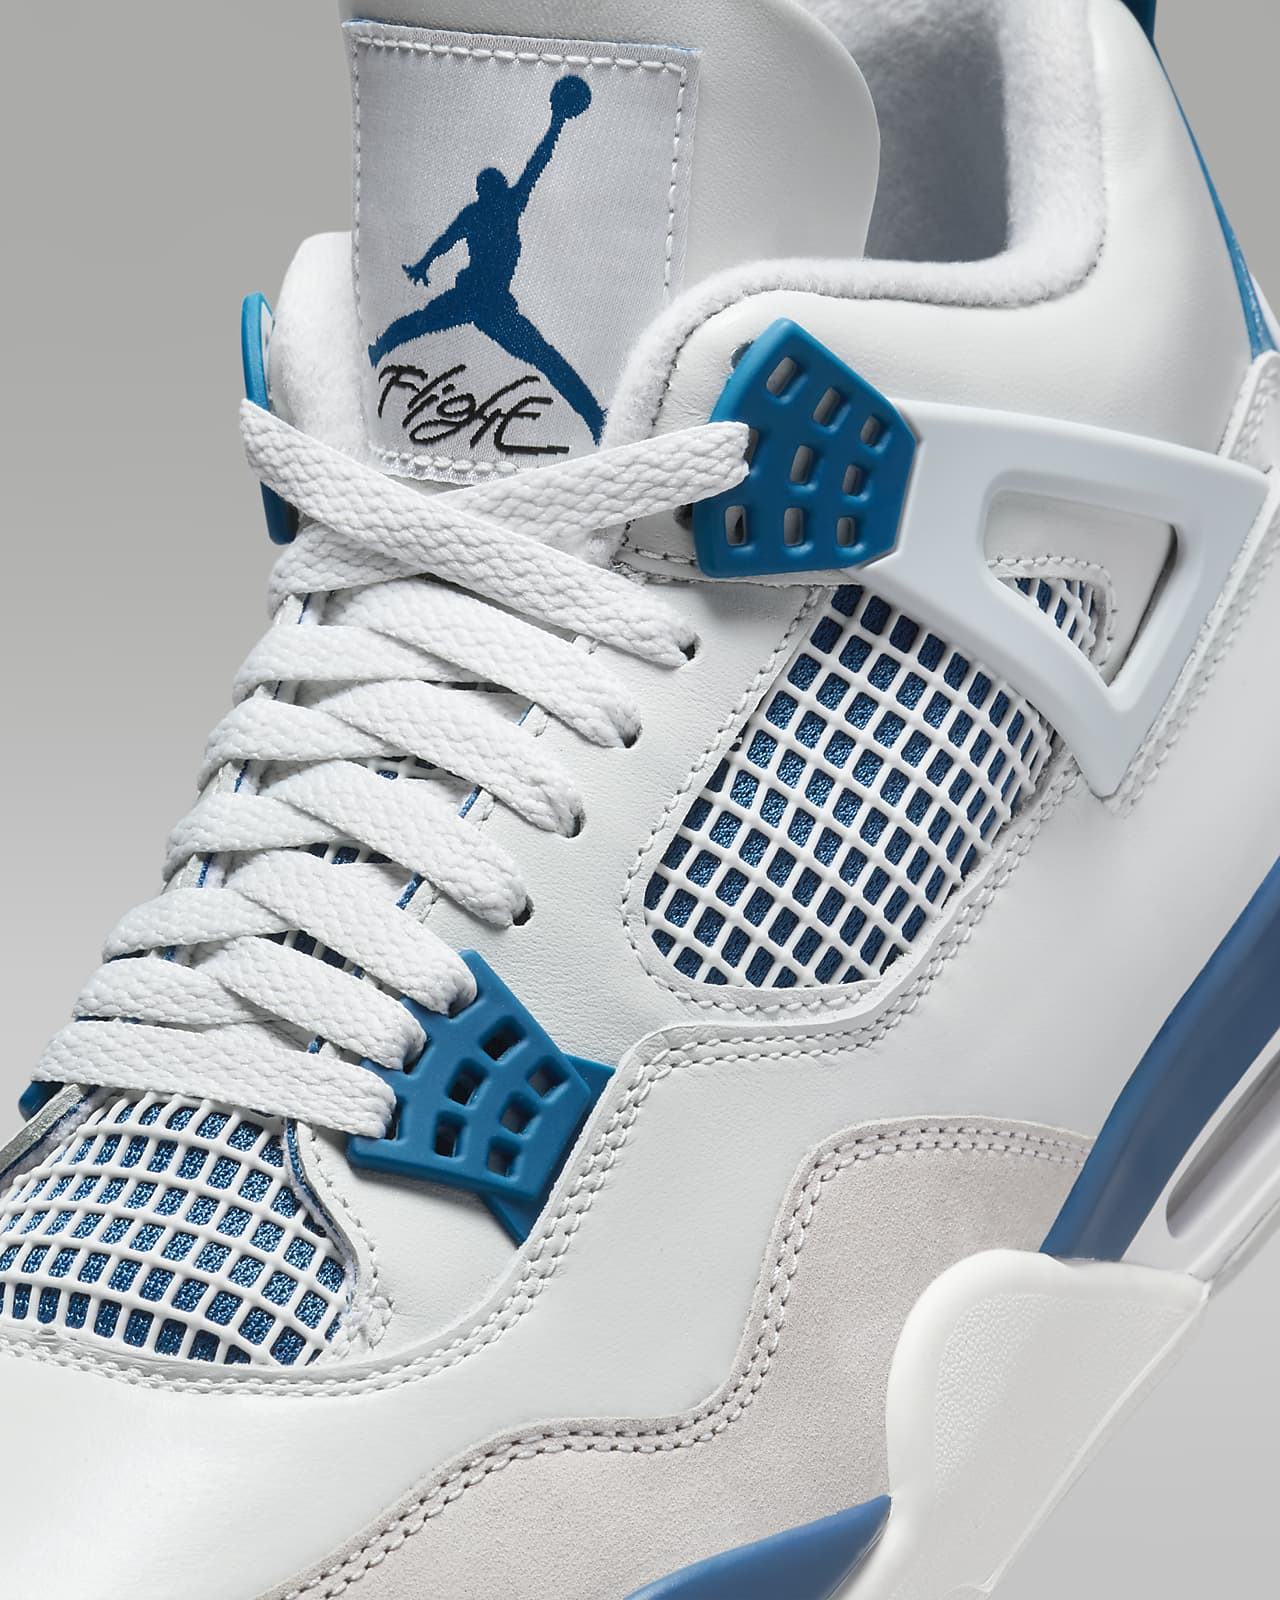 Nike Air Jordan 4 Retro Industrial Blue即日発送可能